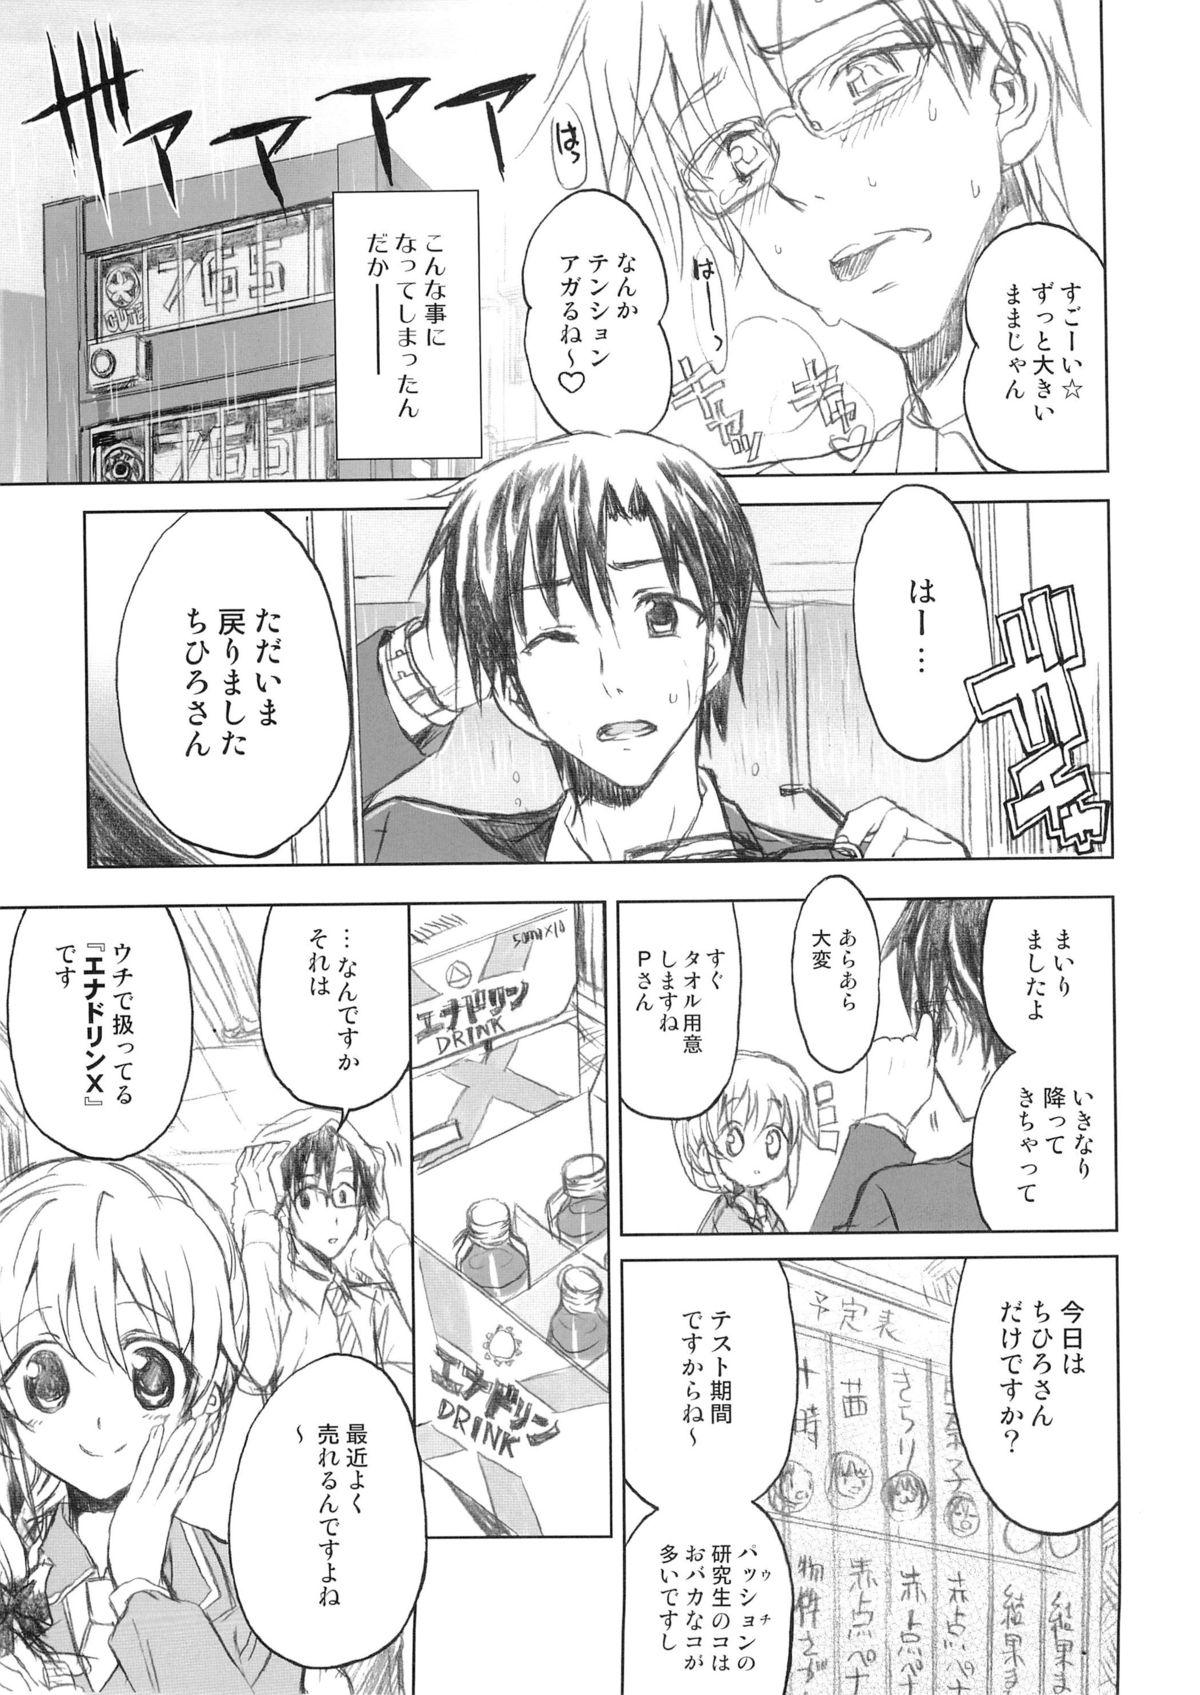 Nerd PASSION FRUITS GIRLS #2 "Jougasaki Mika" - The idolmaster Corrida - Page 8